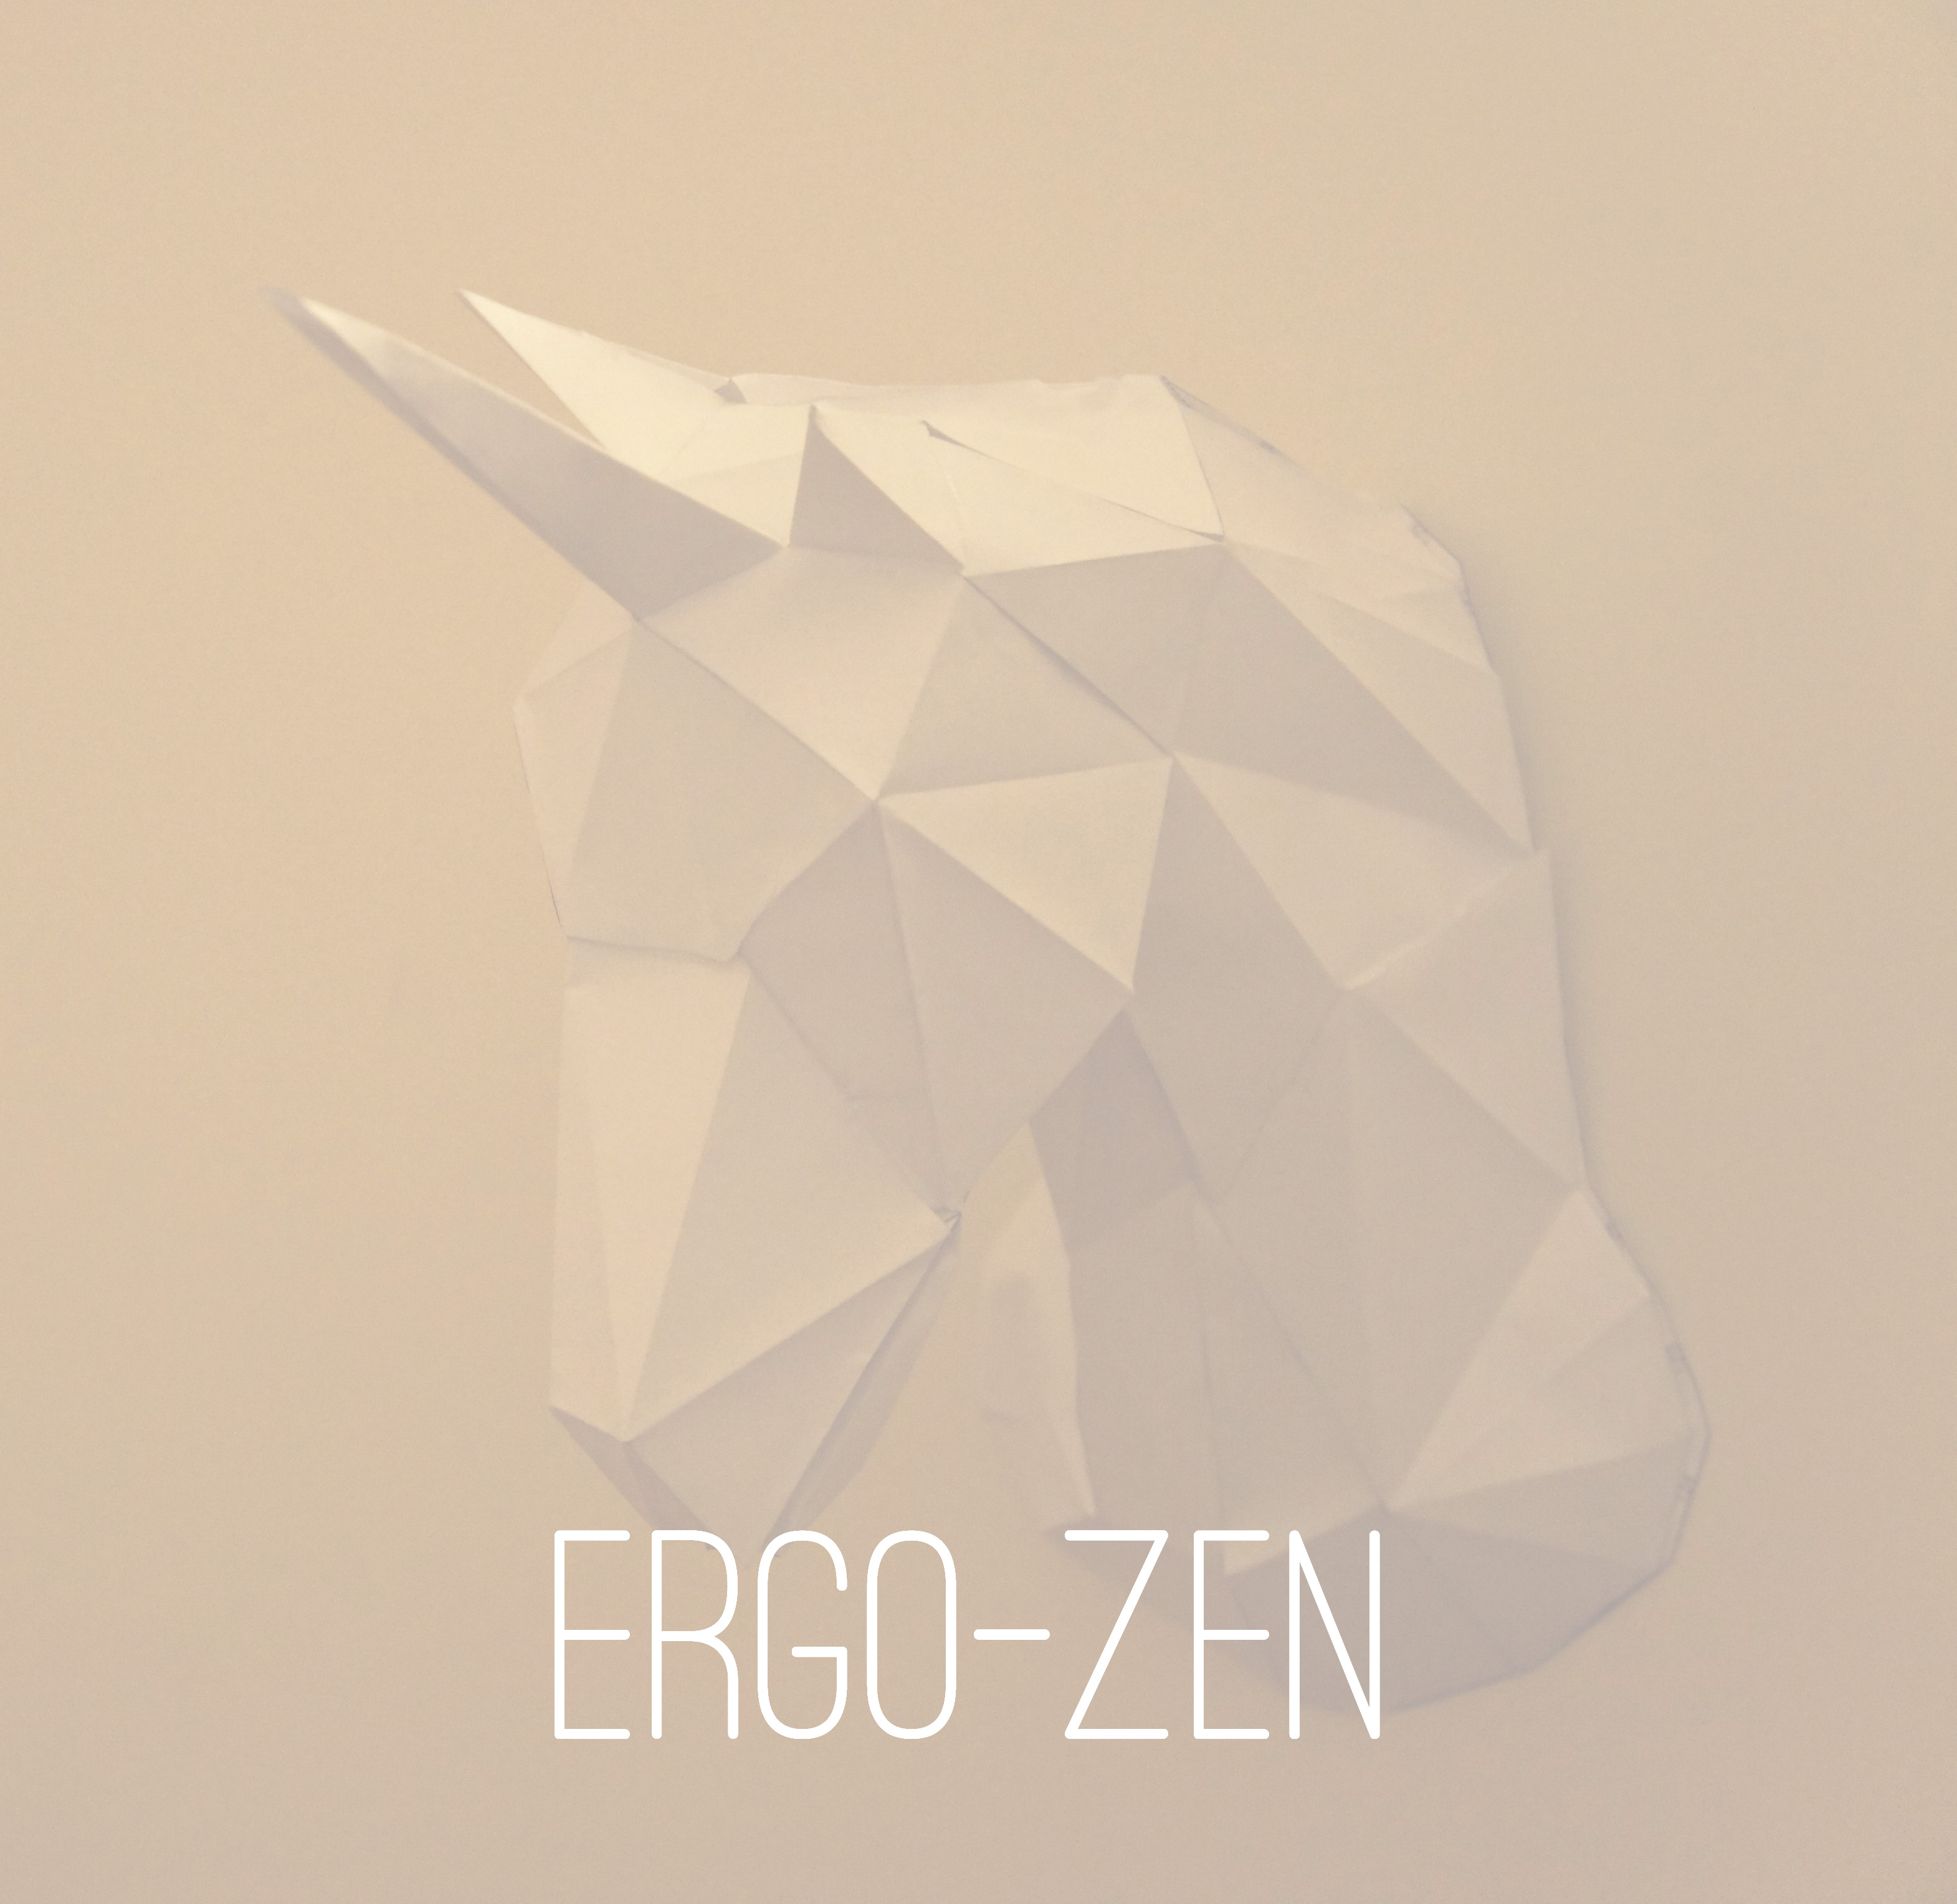 Ergo-zen – Blog déco, mode, cuisine